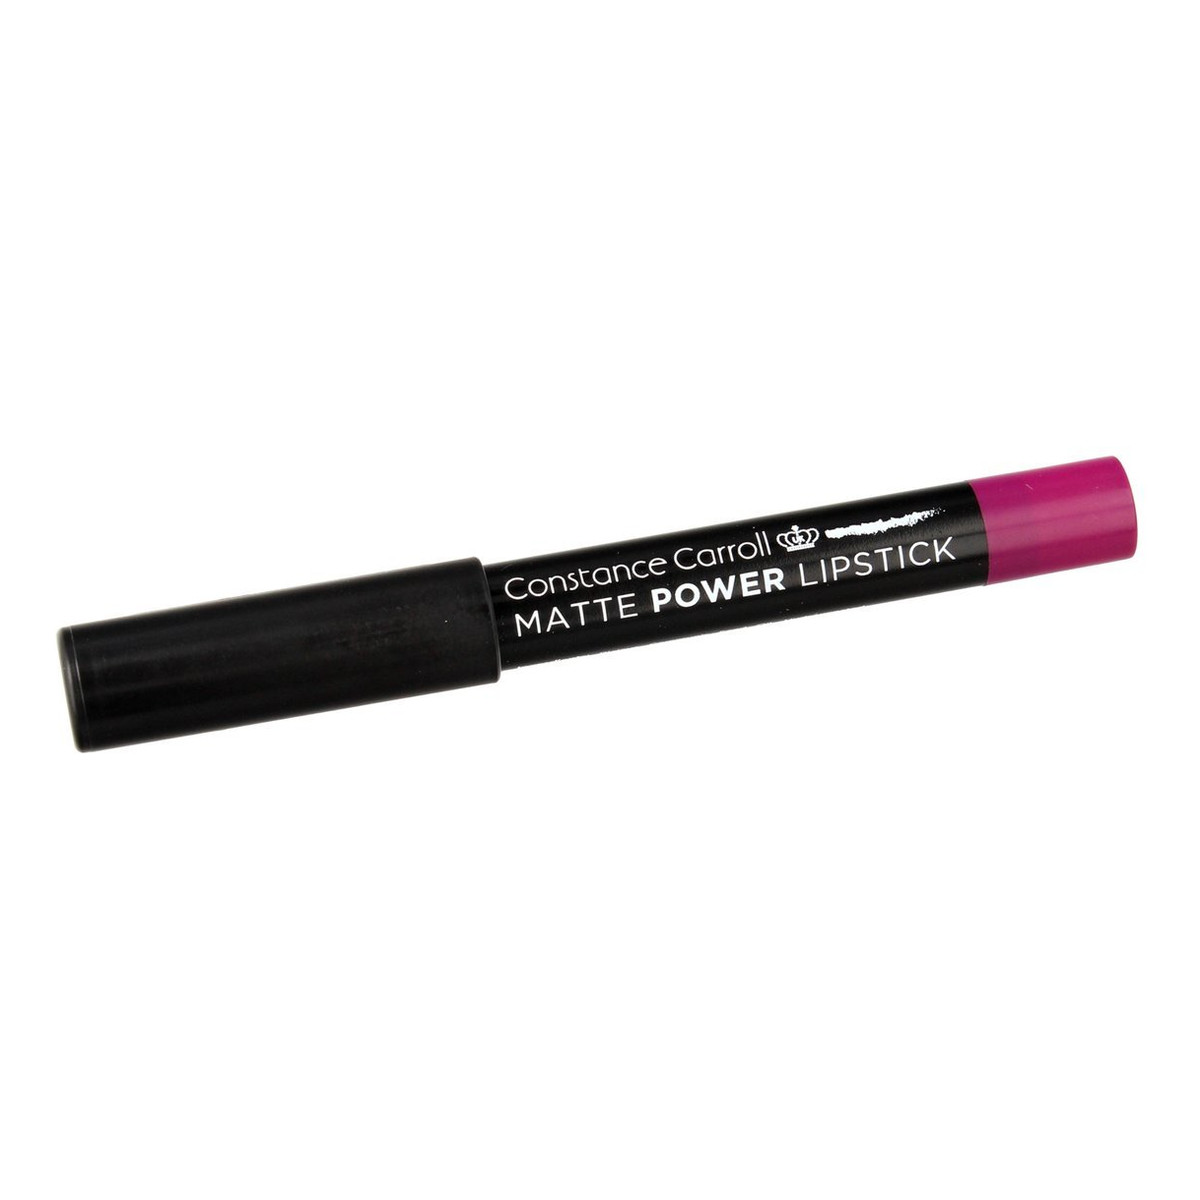 Constance Carroll Matte Power Lipstick Pomadka matowa w kredce